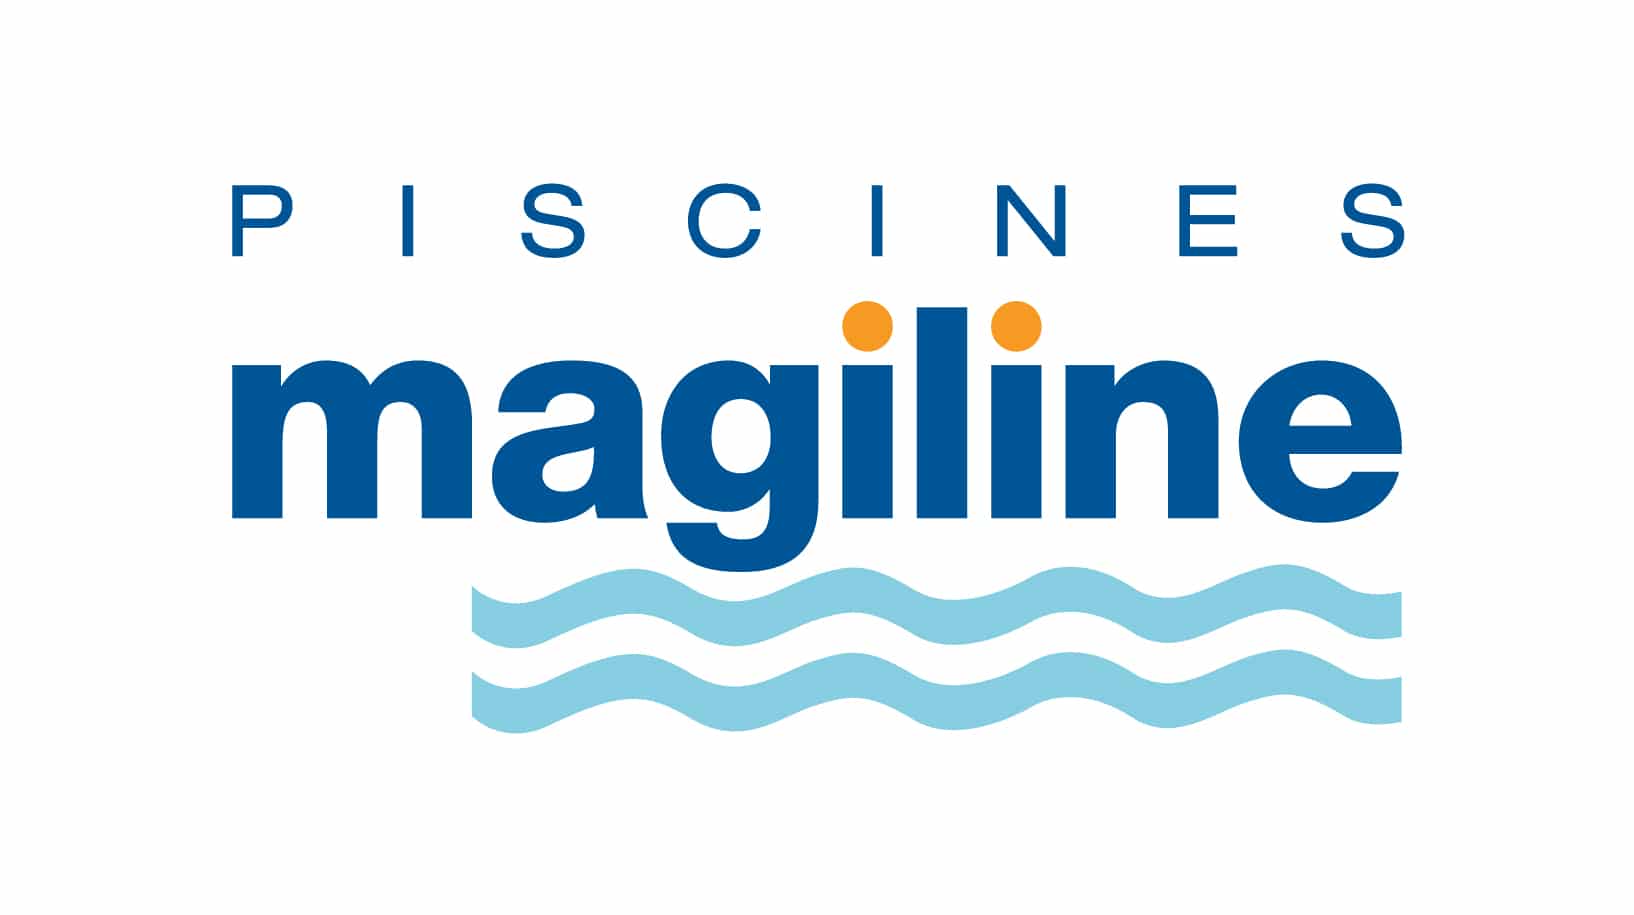 Logo Magiline